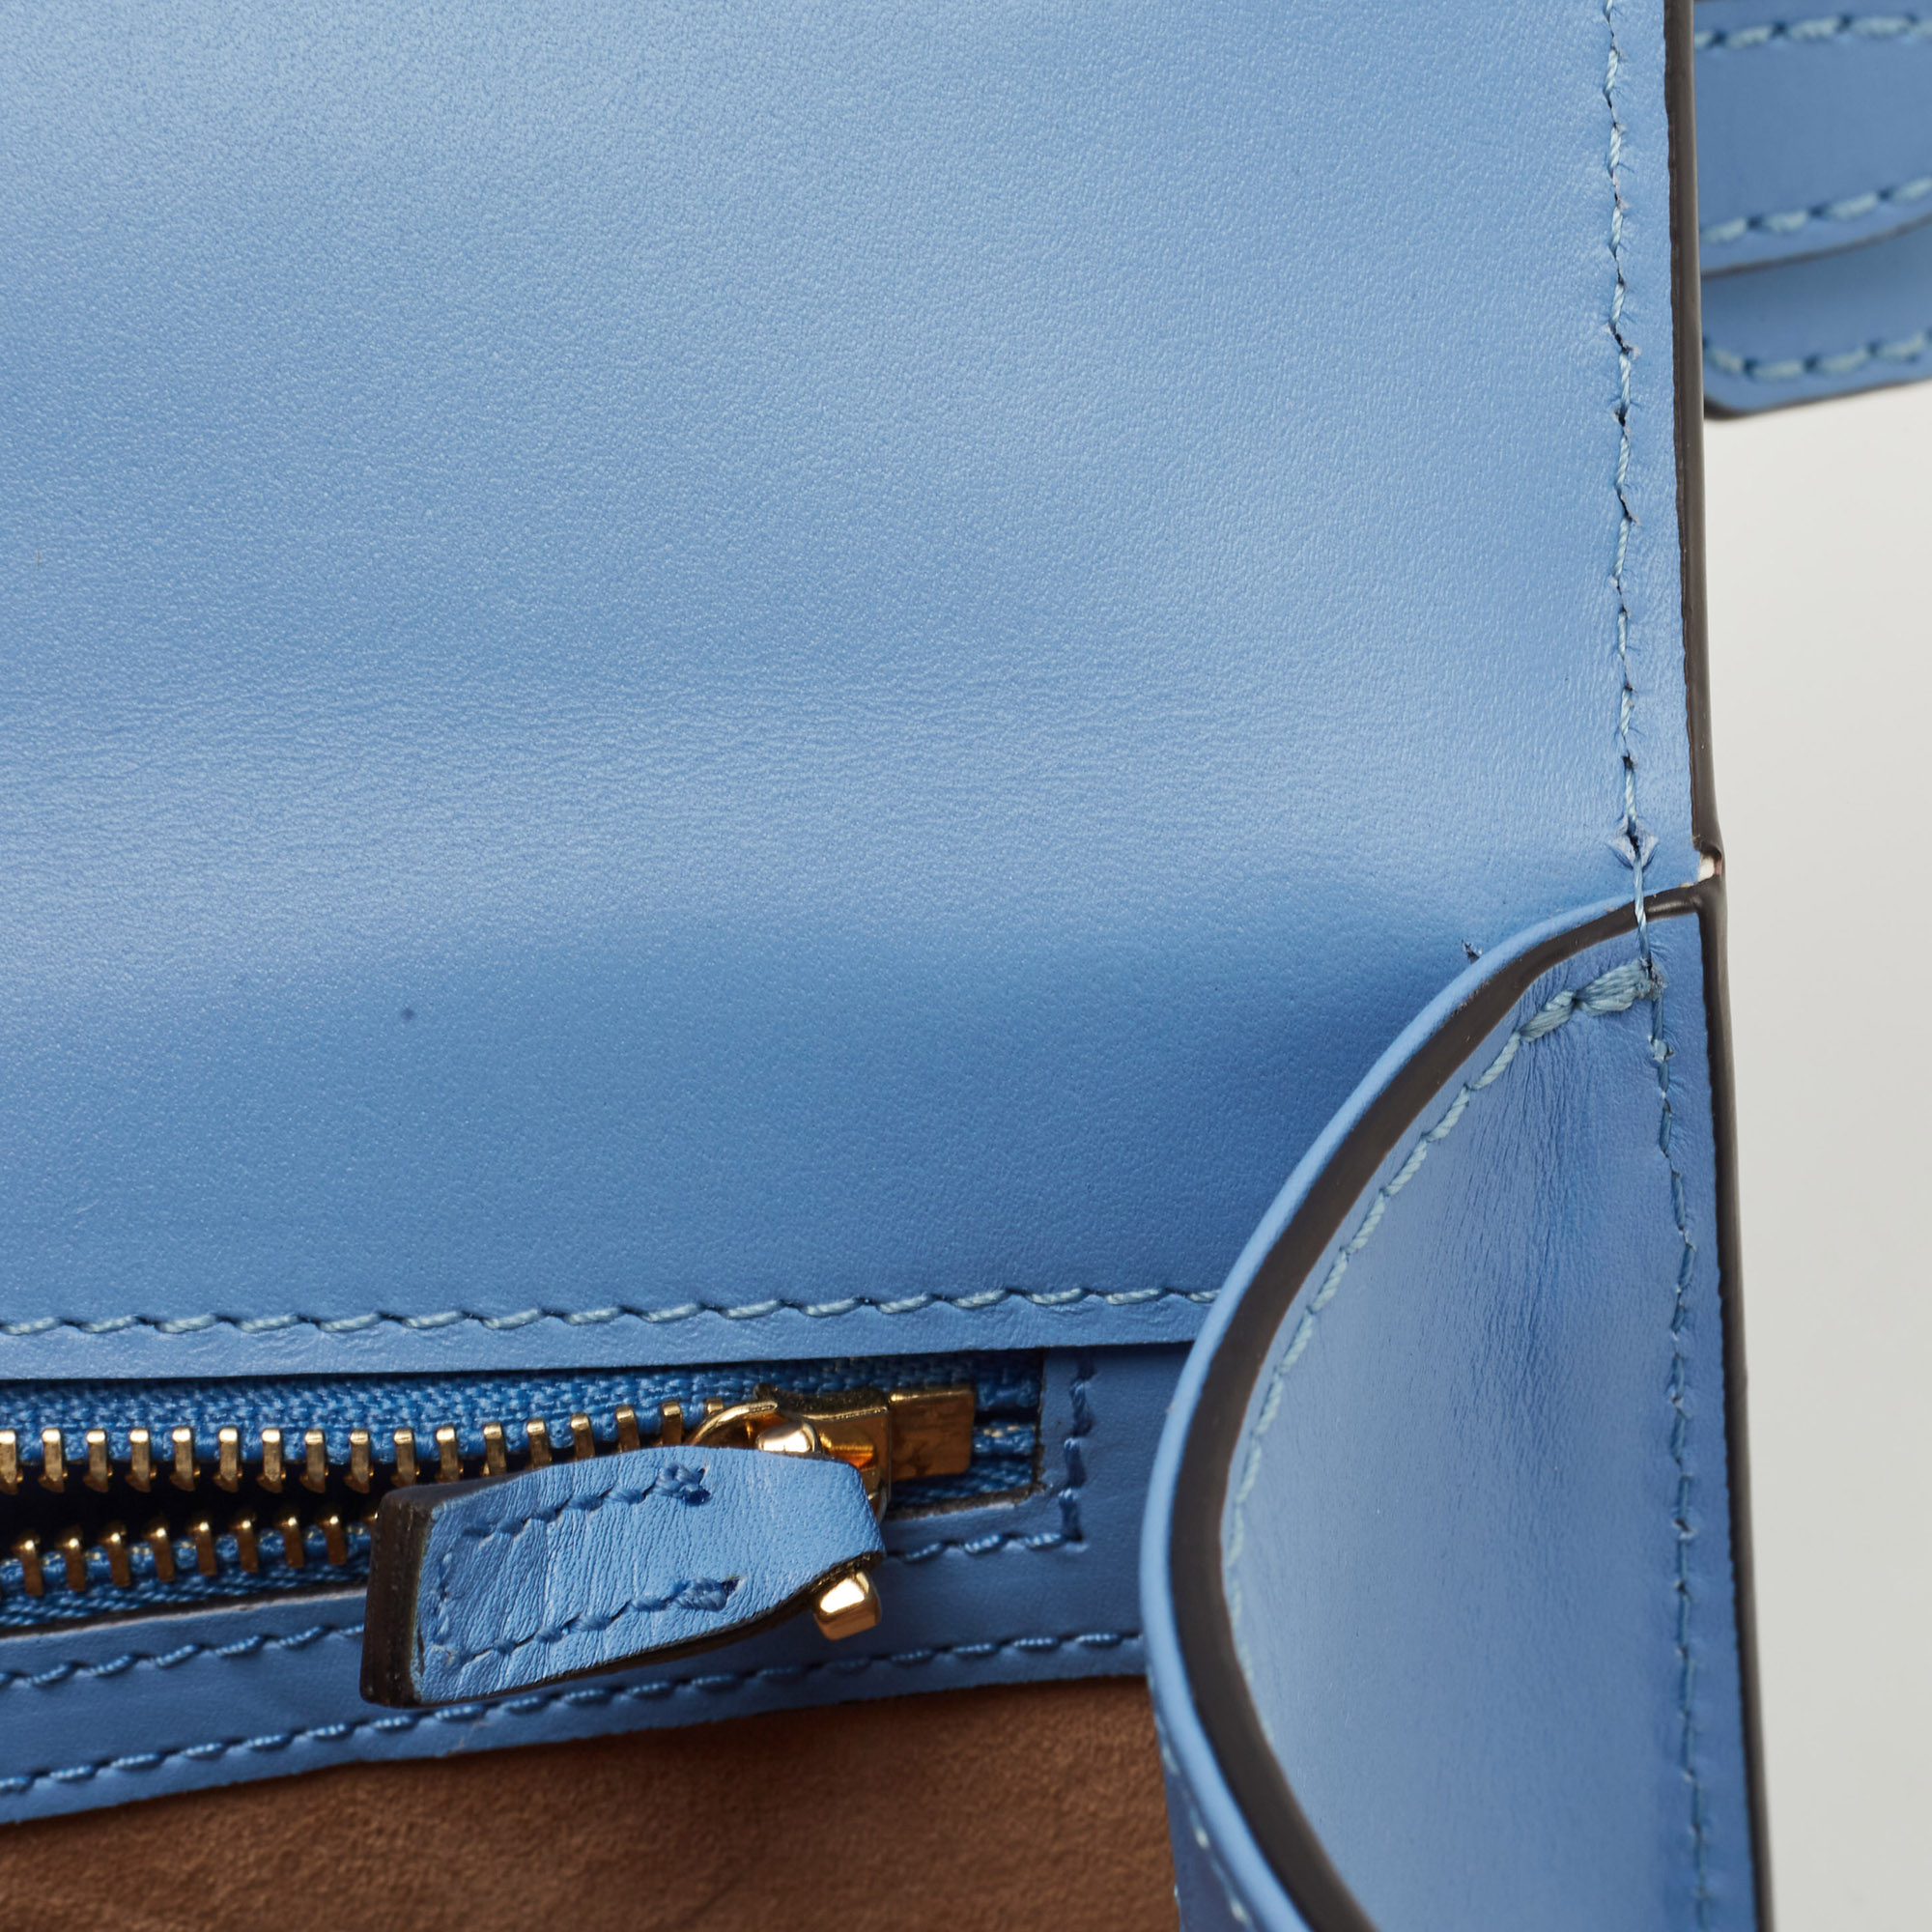 Gucci Blue Leather Small Web Sylvie Shoulder Bag